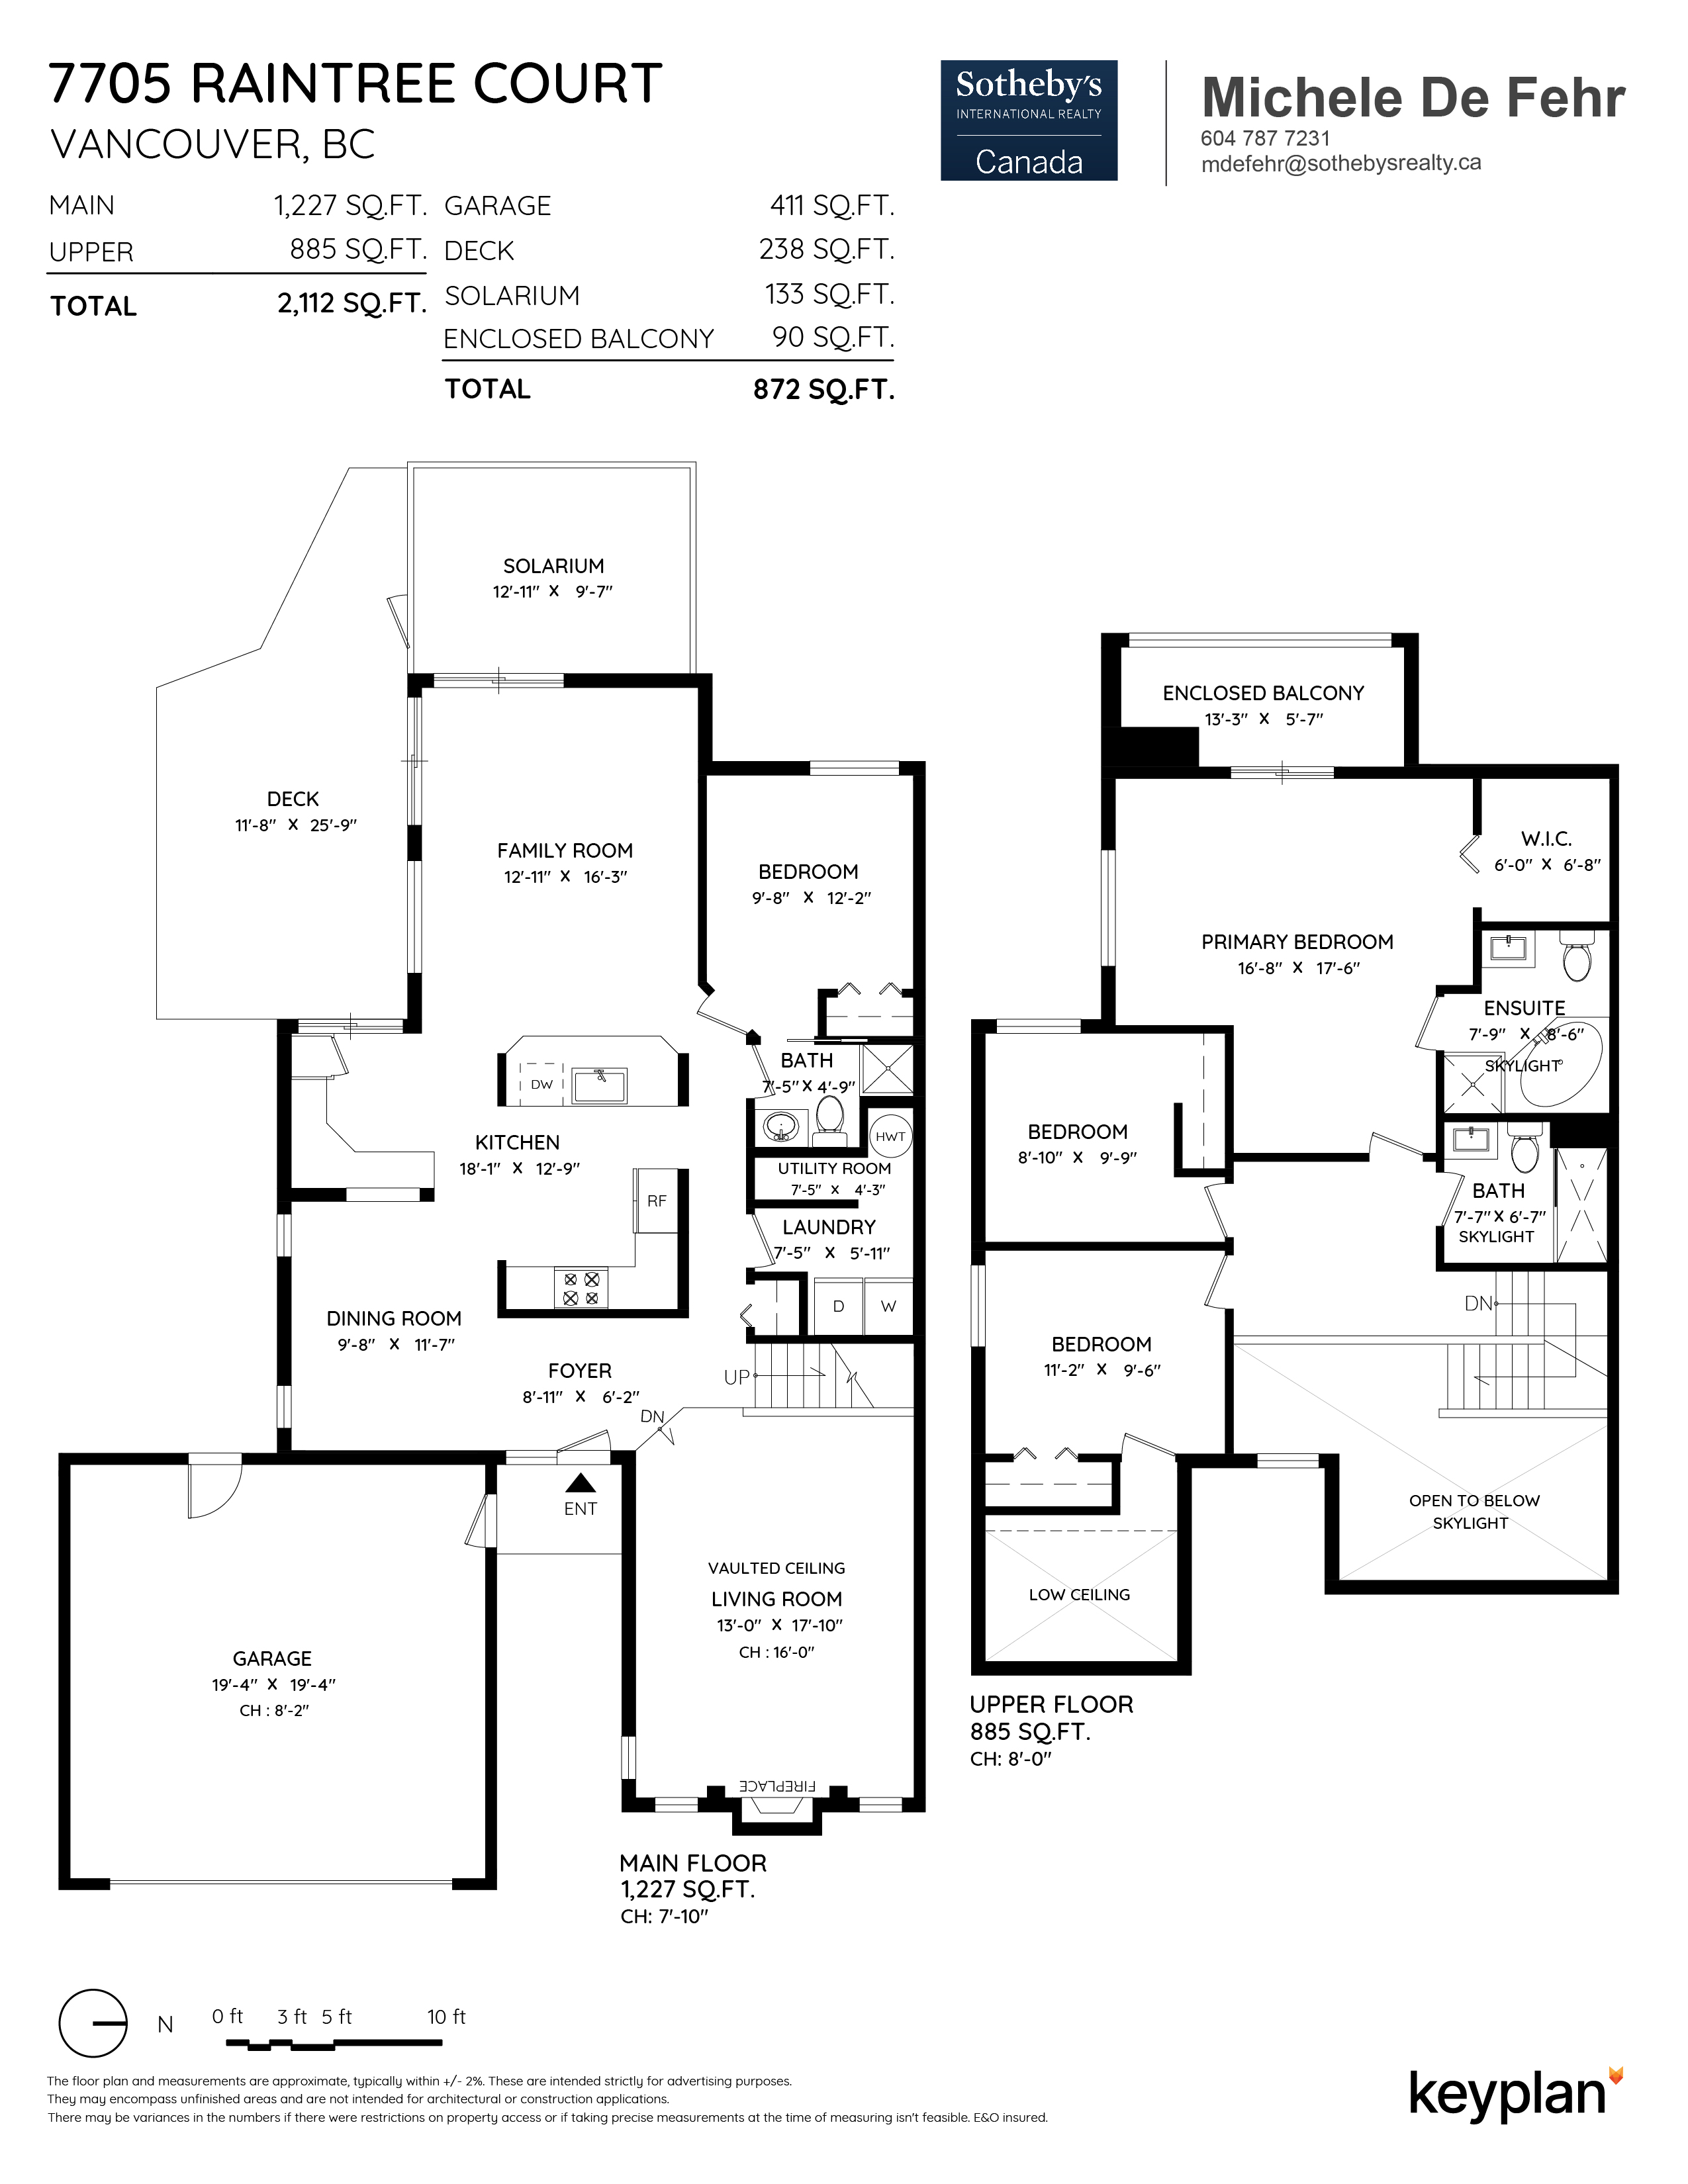 Michele De Fehr - 7705 Raintree Court, Vancouver, BC, Canada | Floor Plan 1